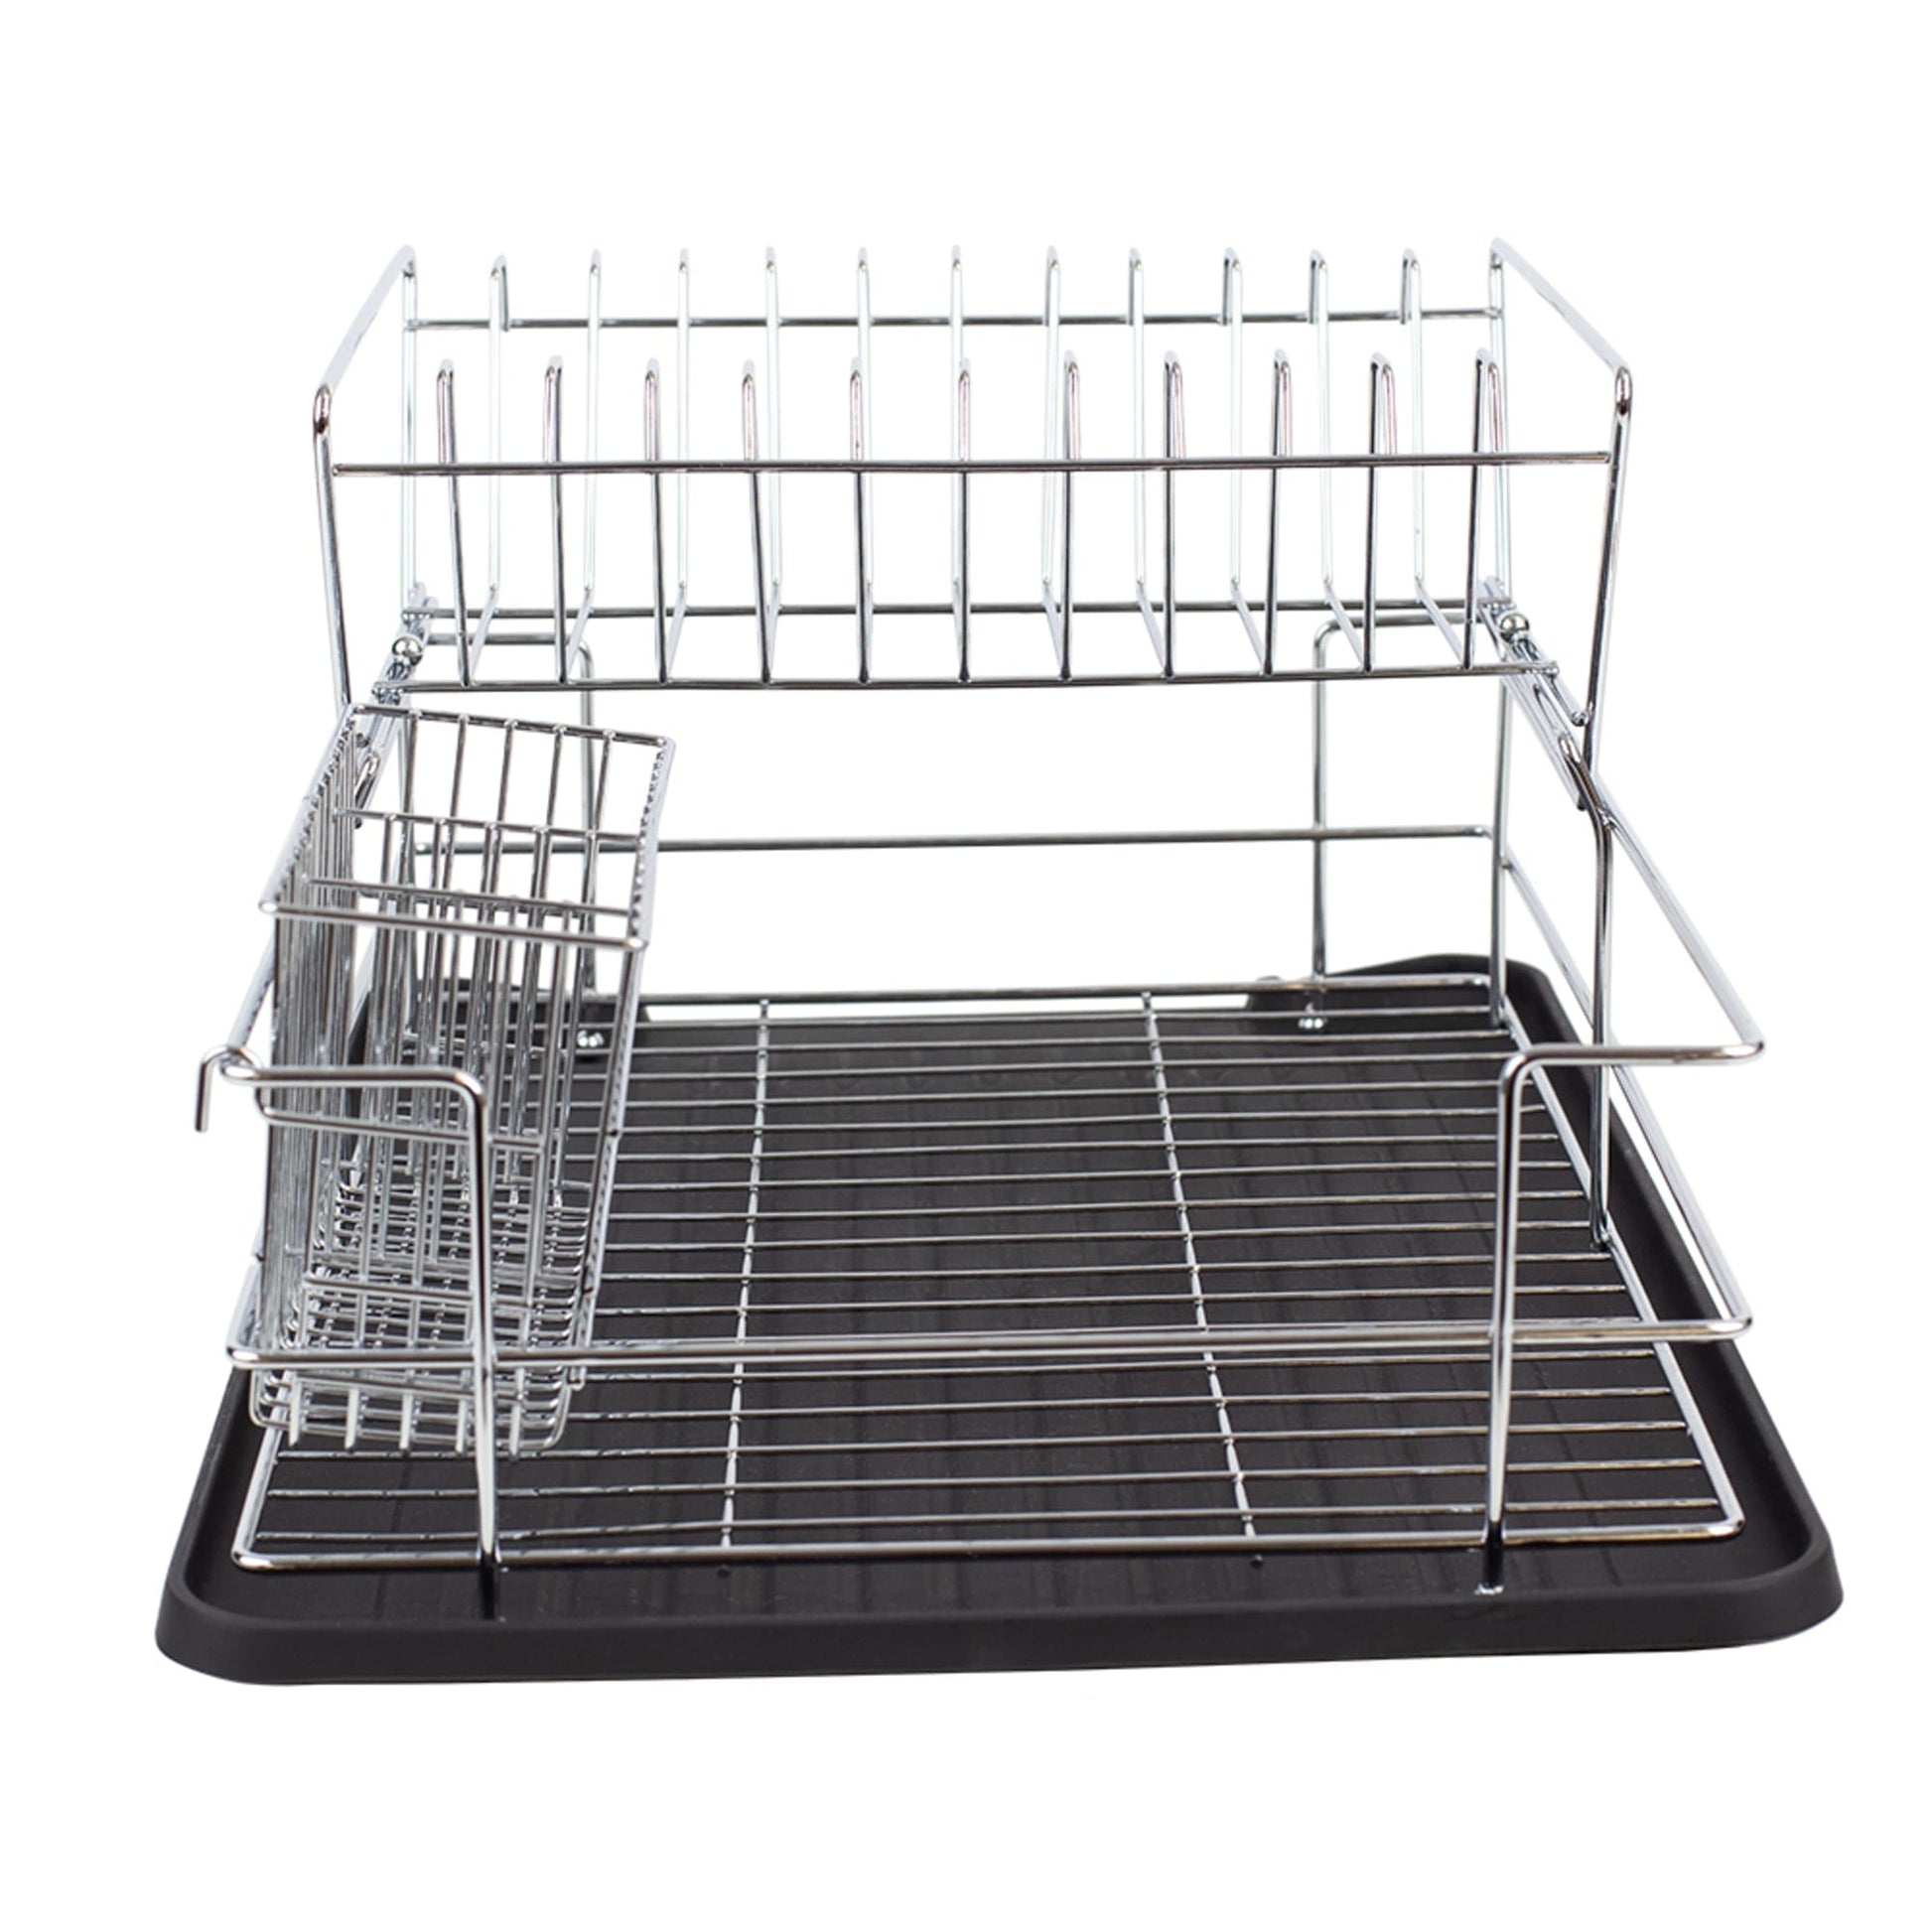 Mdesign Steel Dish Drying Rack/drainer Storage, Set Of 2, Black